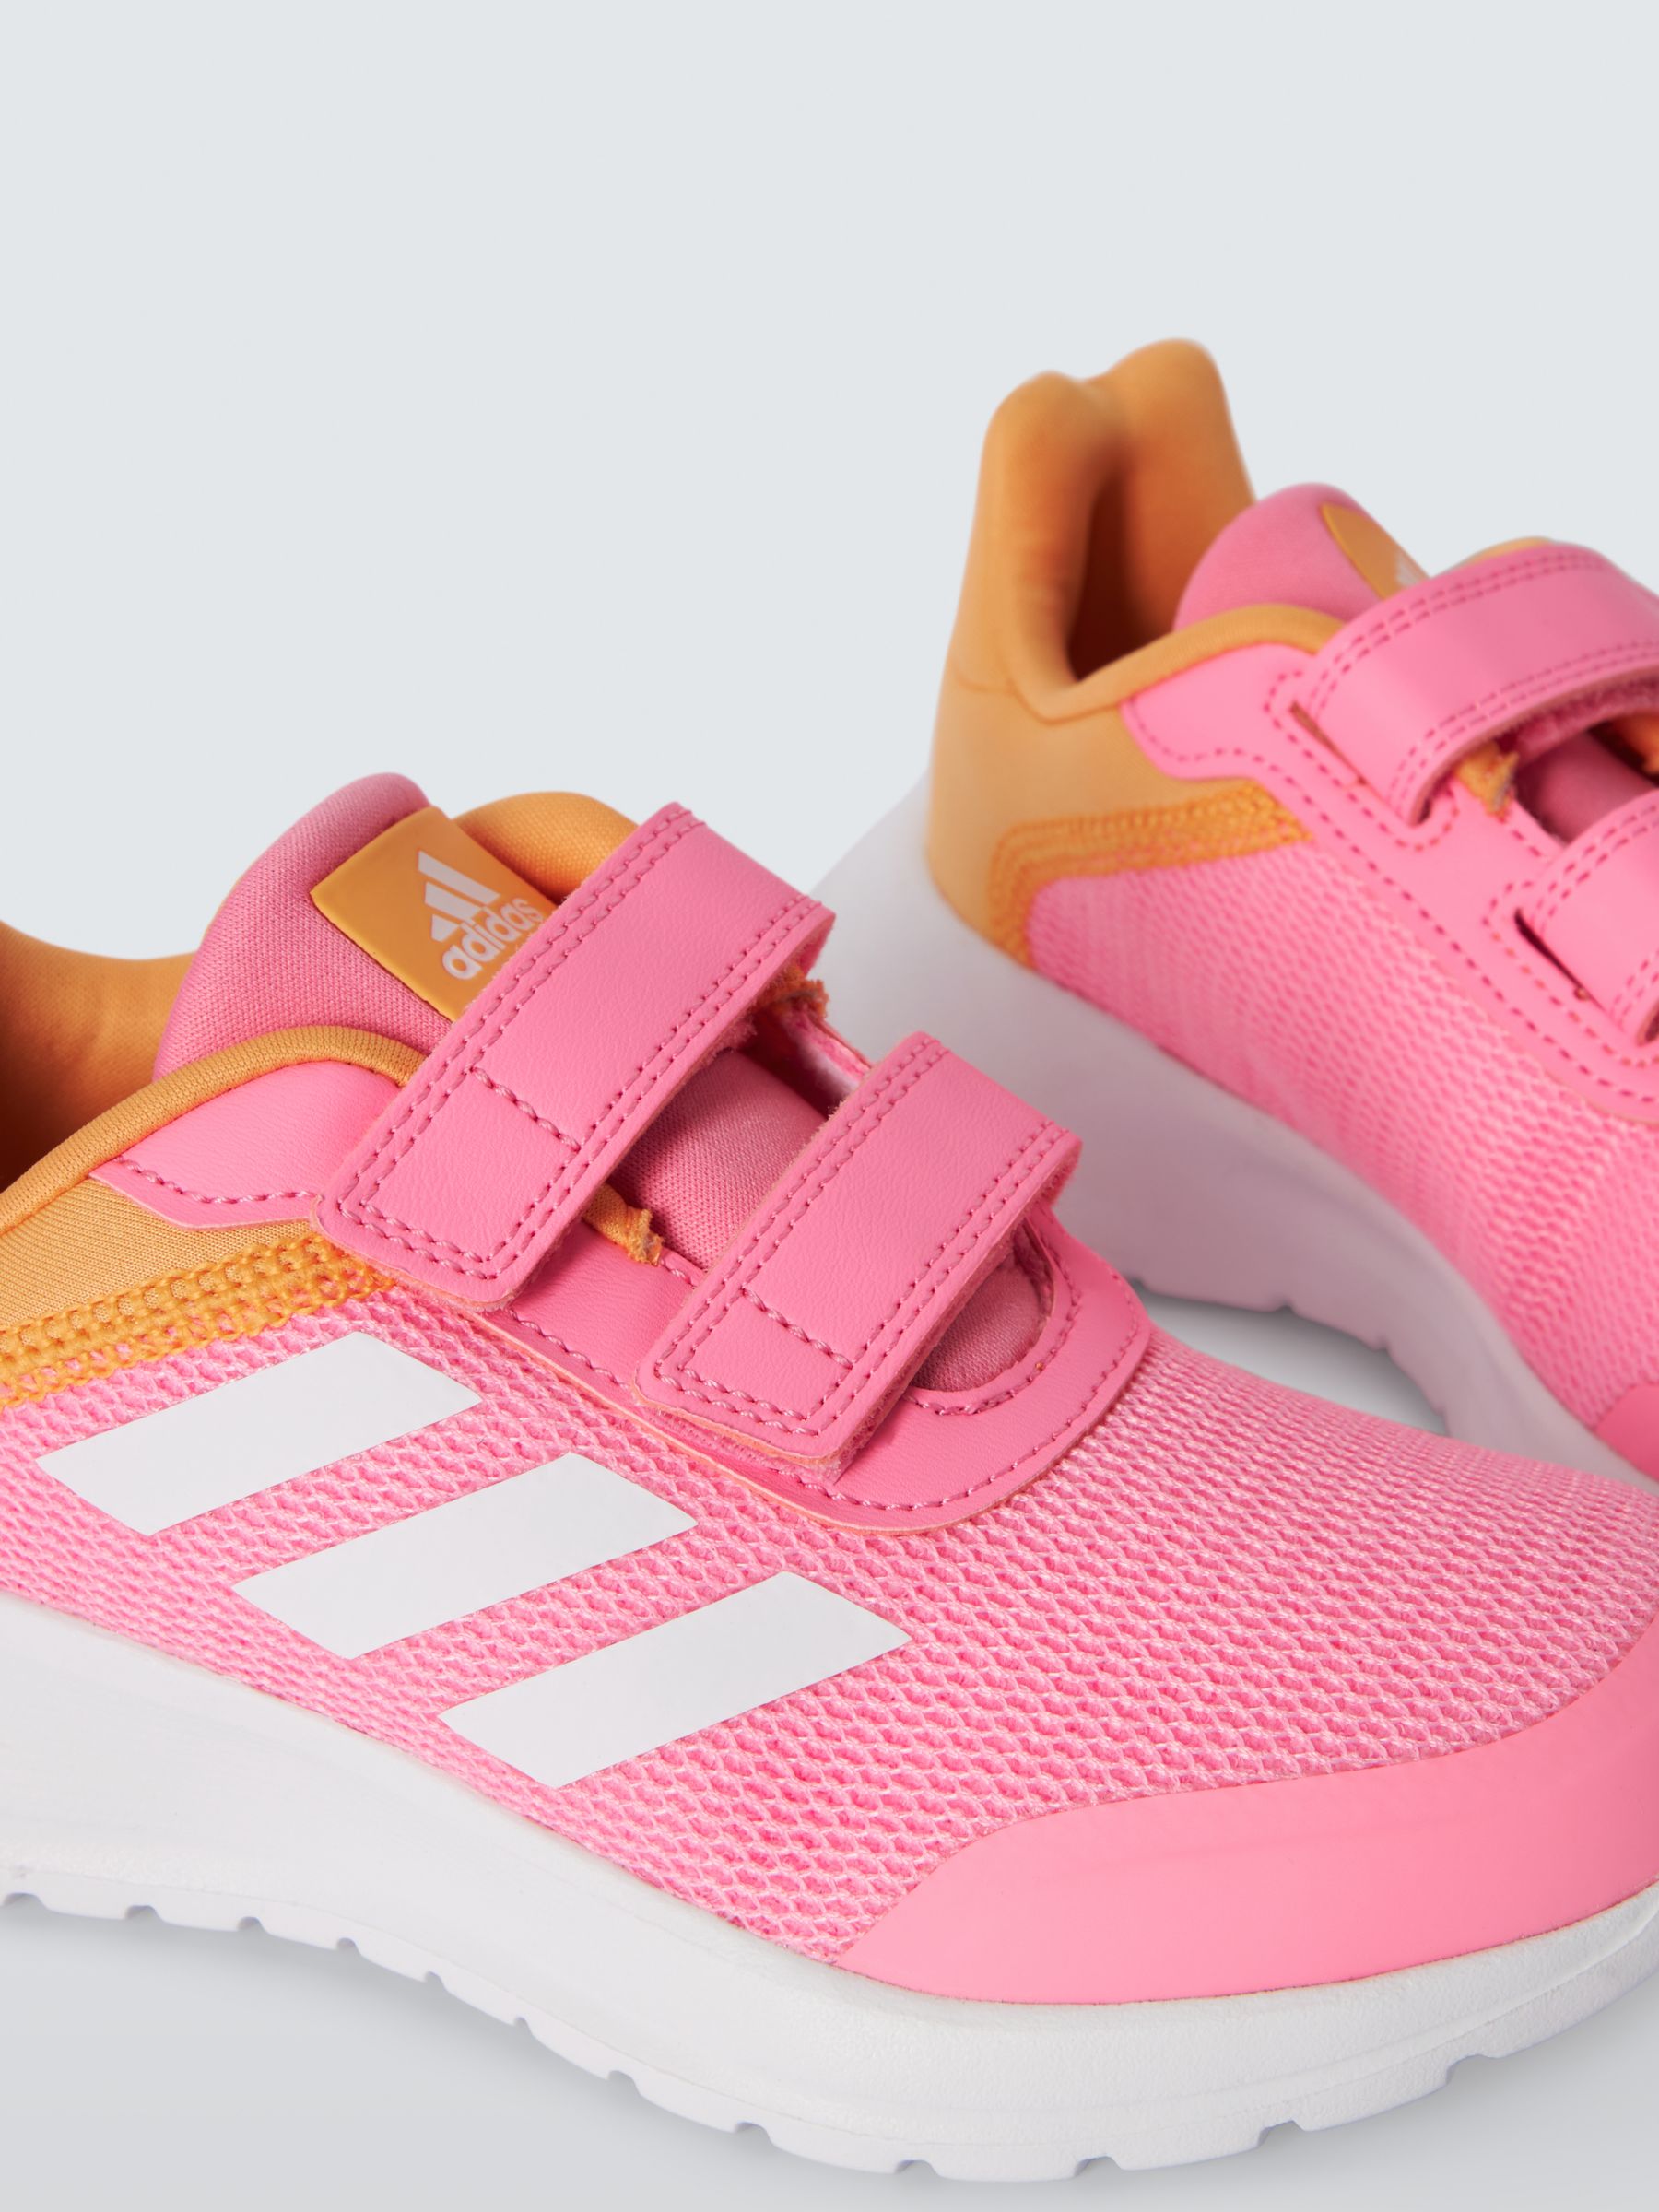 adidas Kids' Tensaur Run Trainers, Pink/White, 1